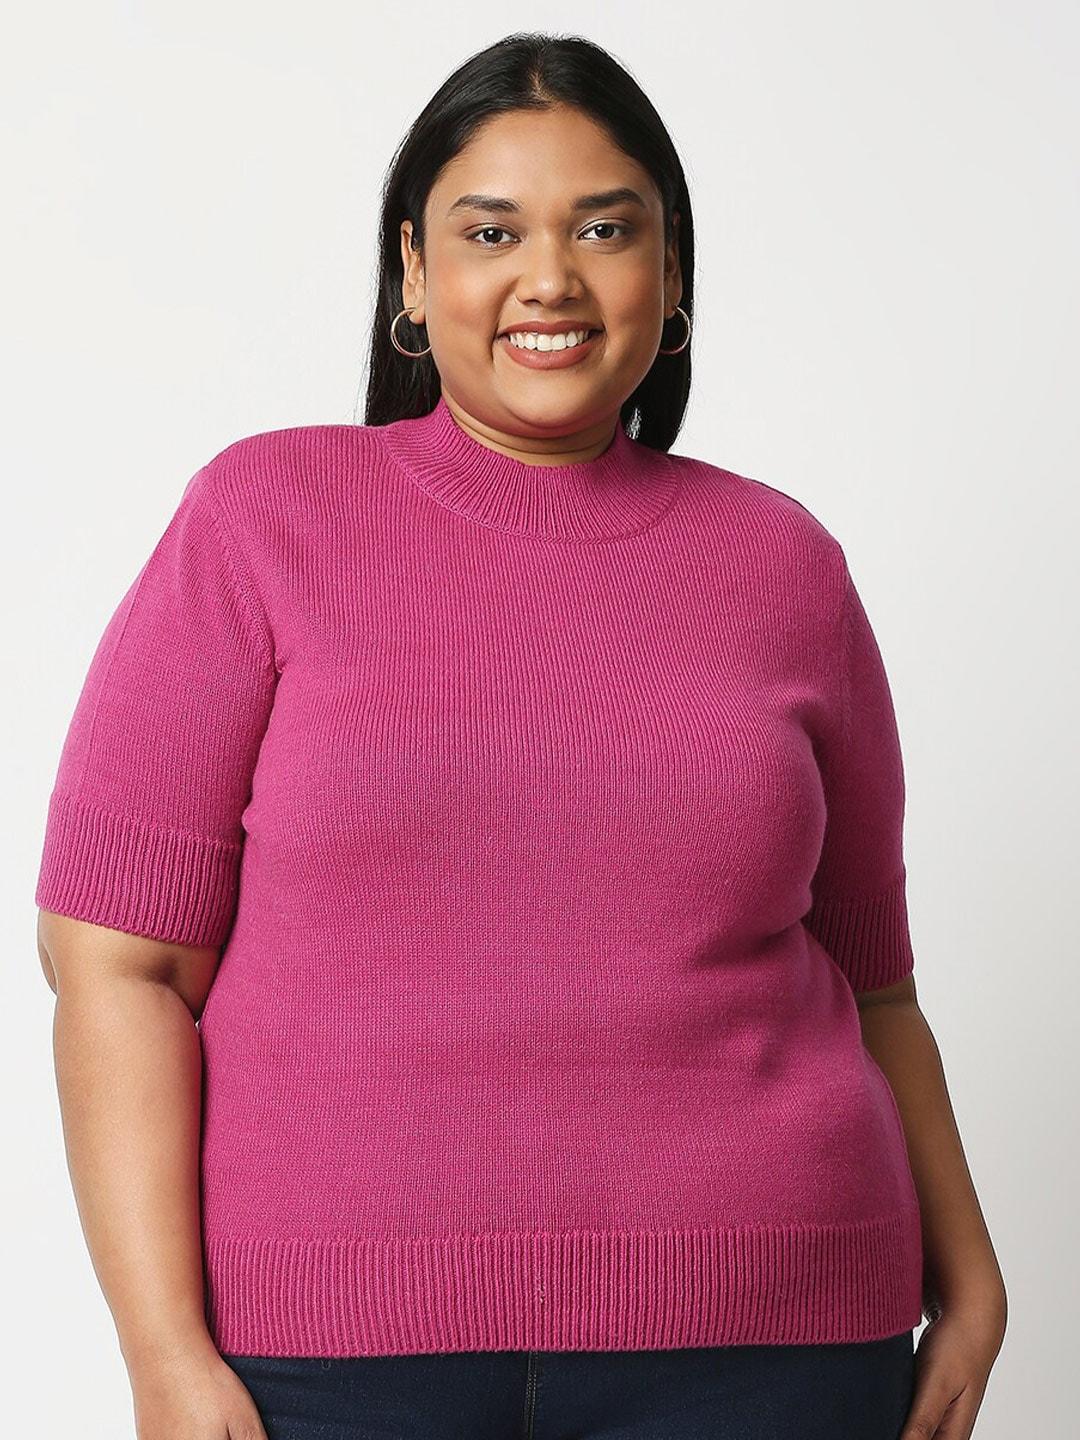 20dresses women fuchsia pink sweater